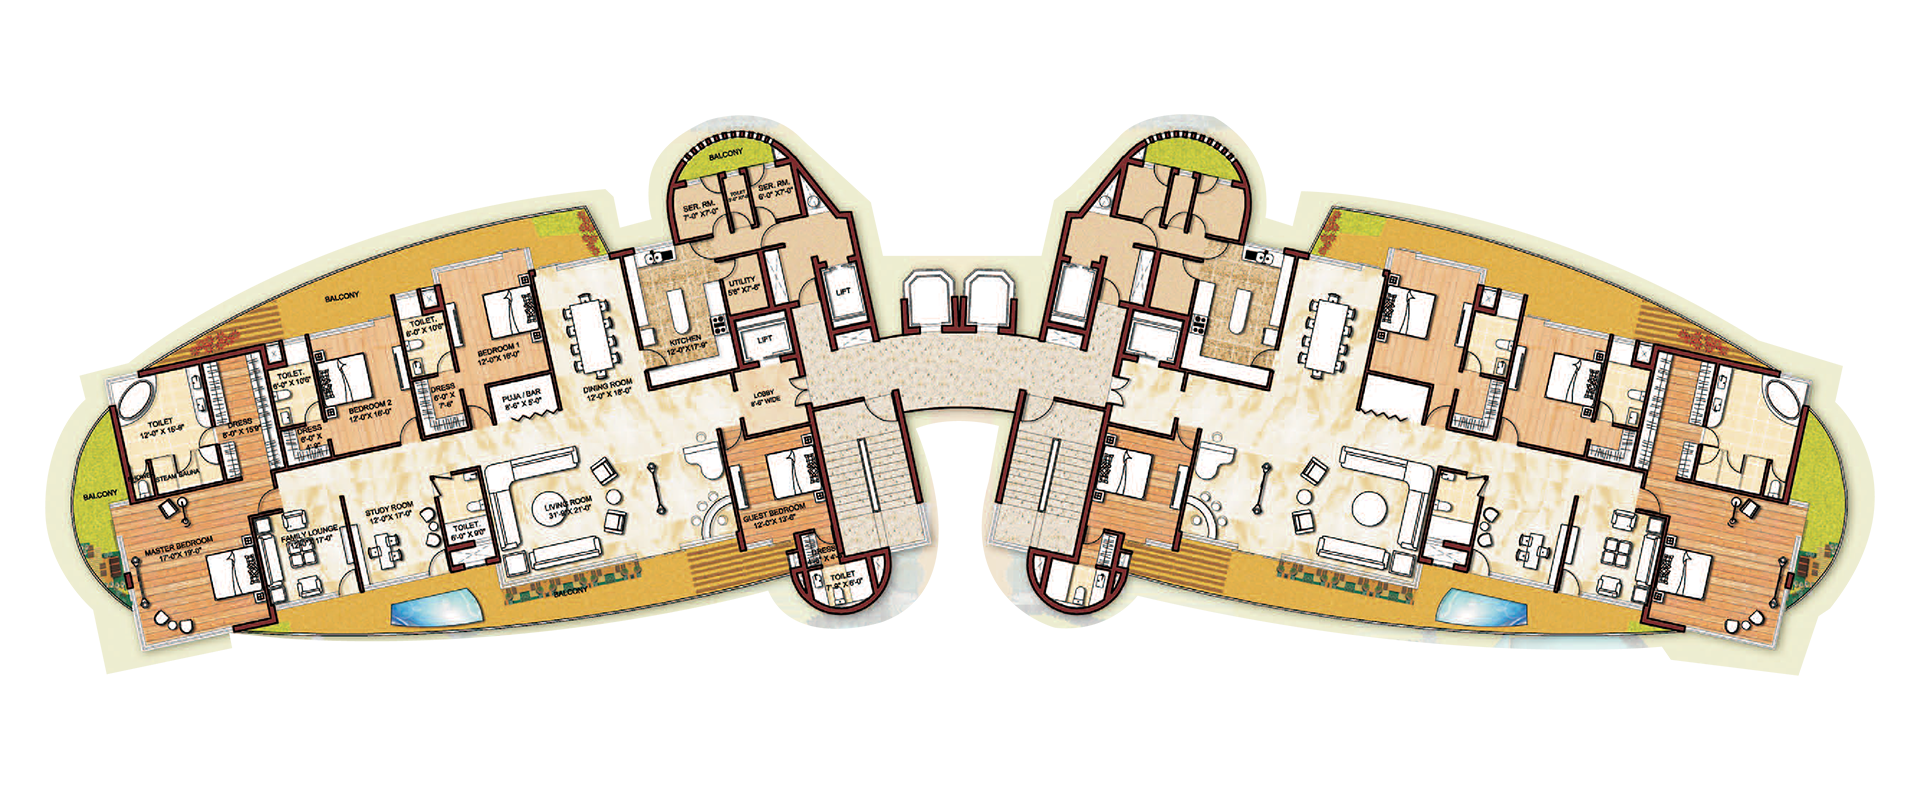 krrish provence estate floor plan